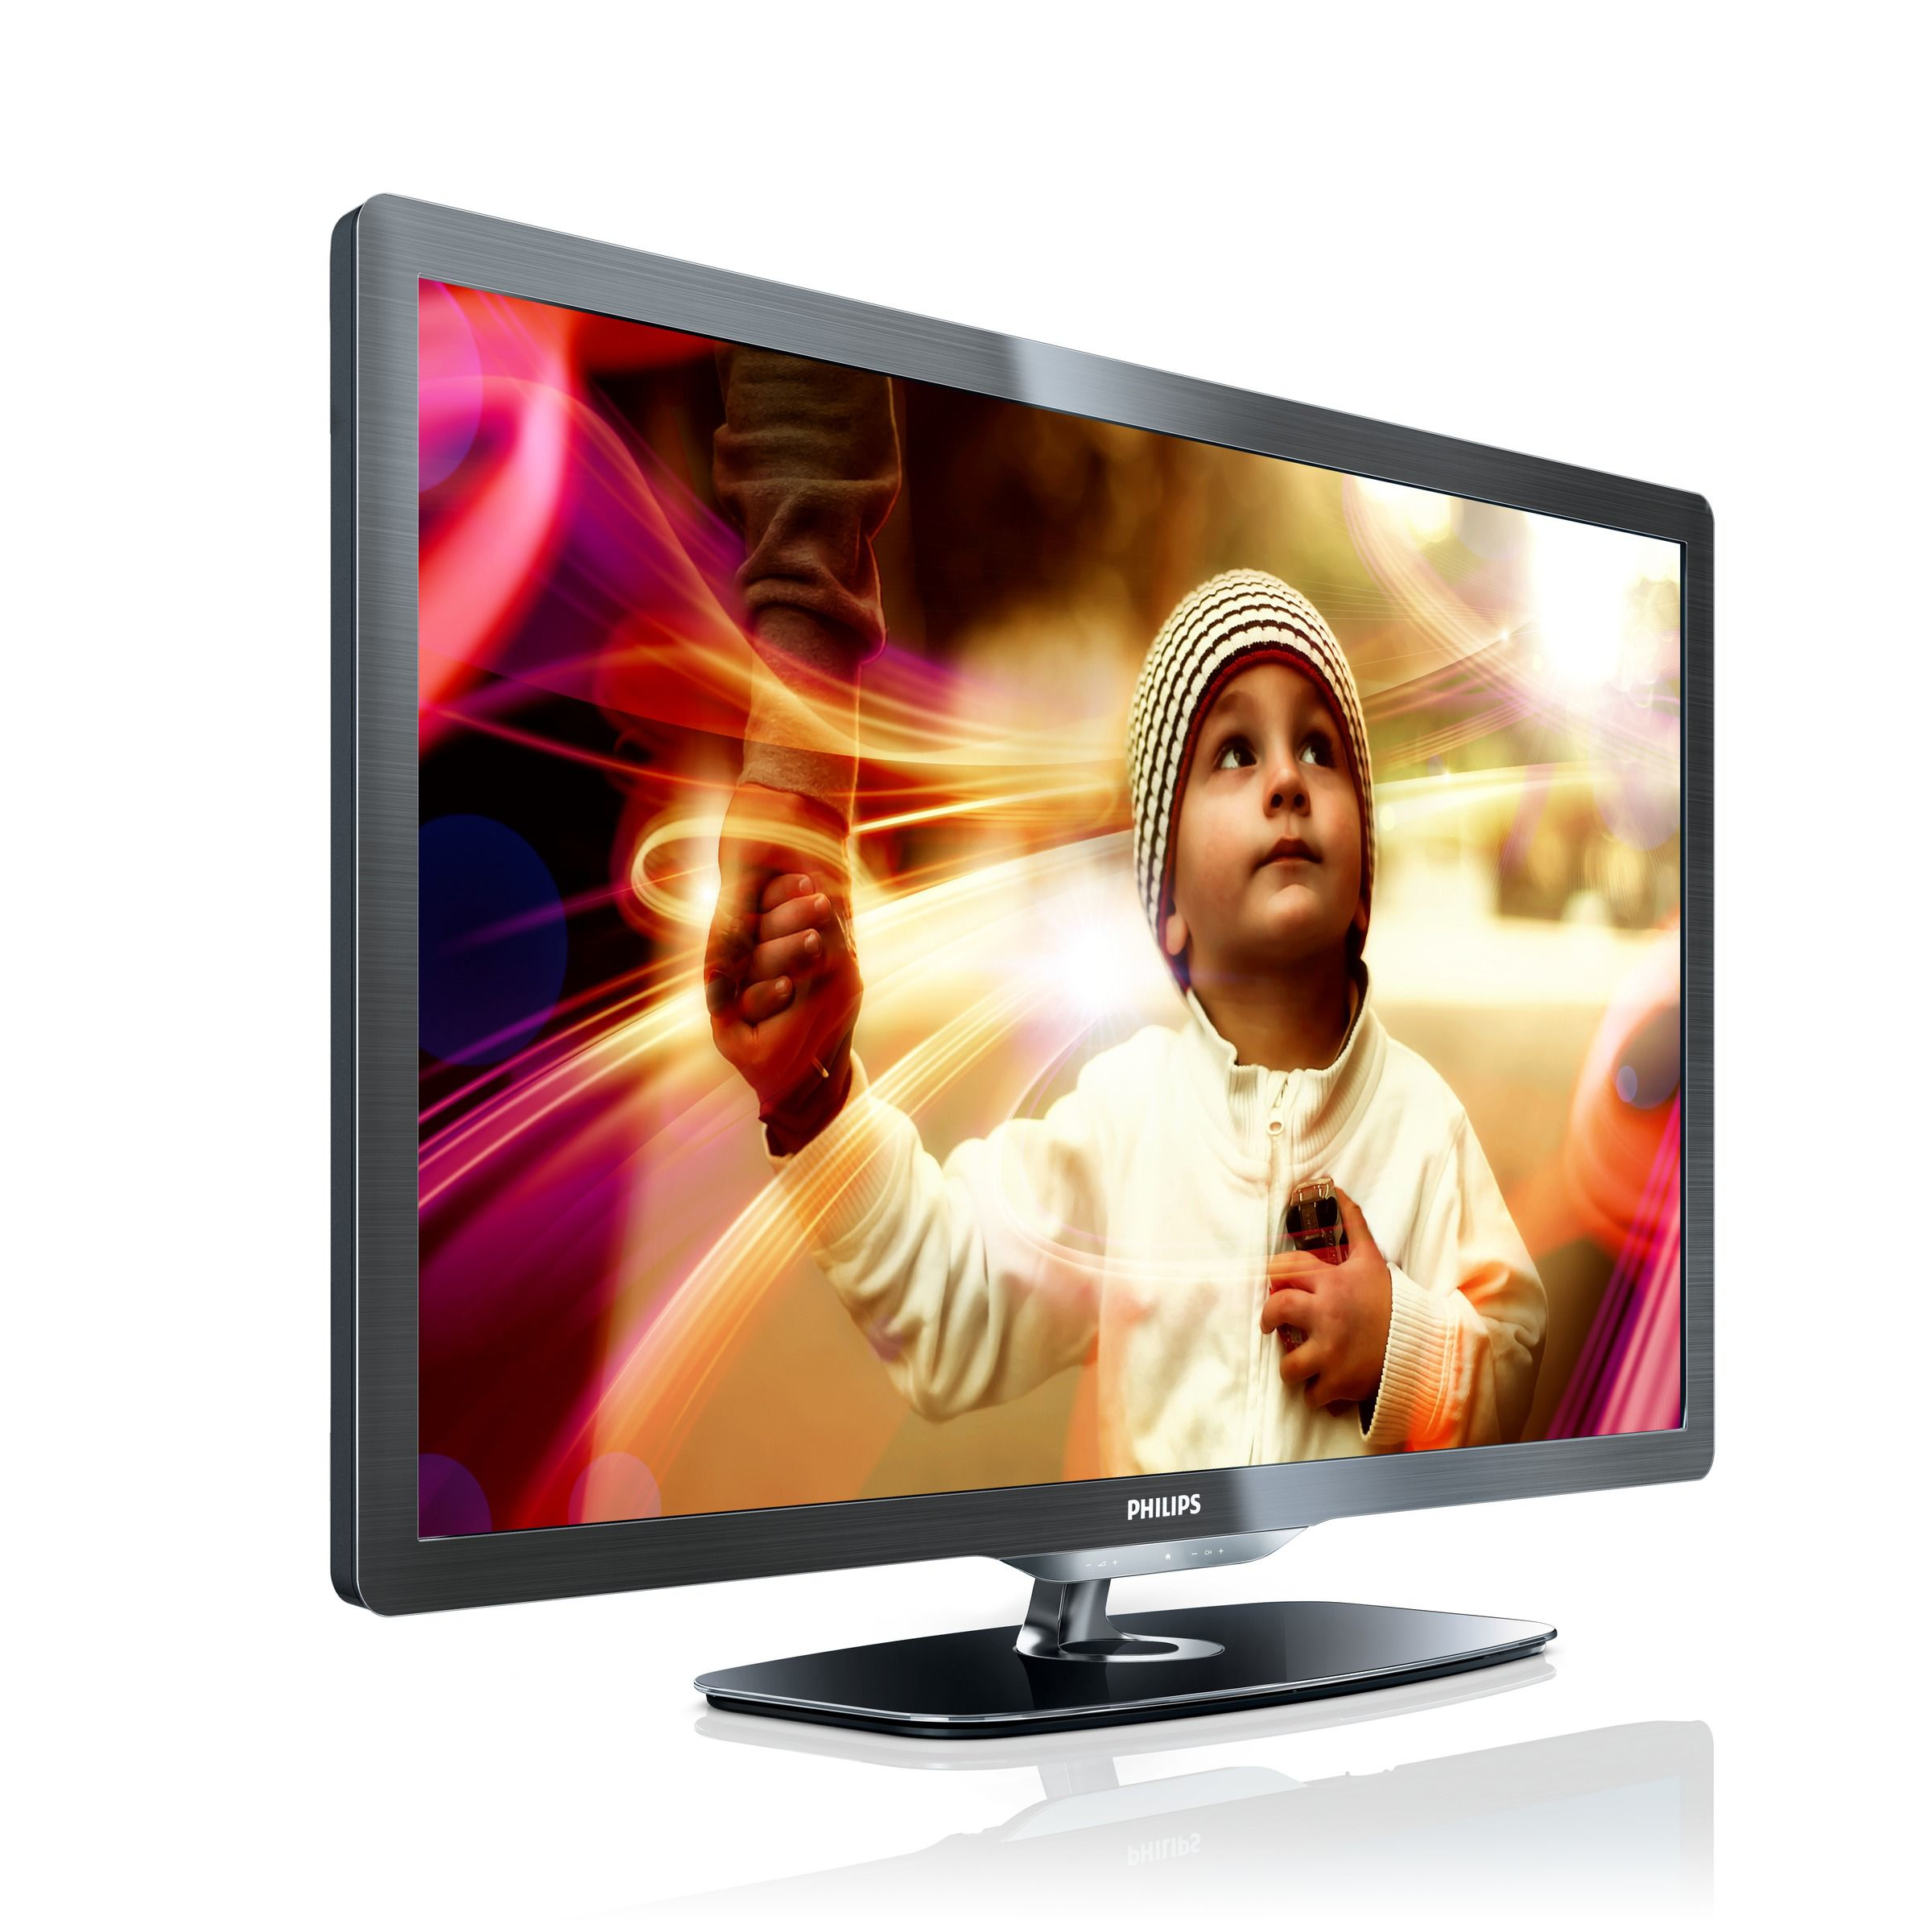 Productivity repose peaceful Specs Philips 6000 series Smart LED TV 32PFL6606H/12 TVs (32PFL6606H/12)